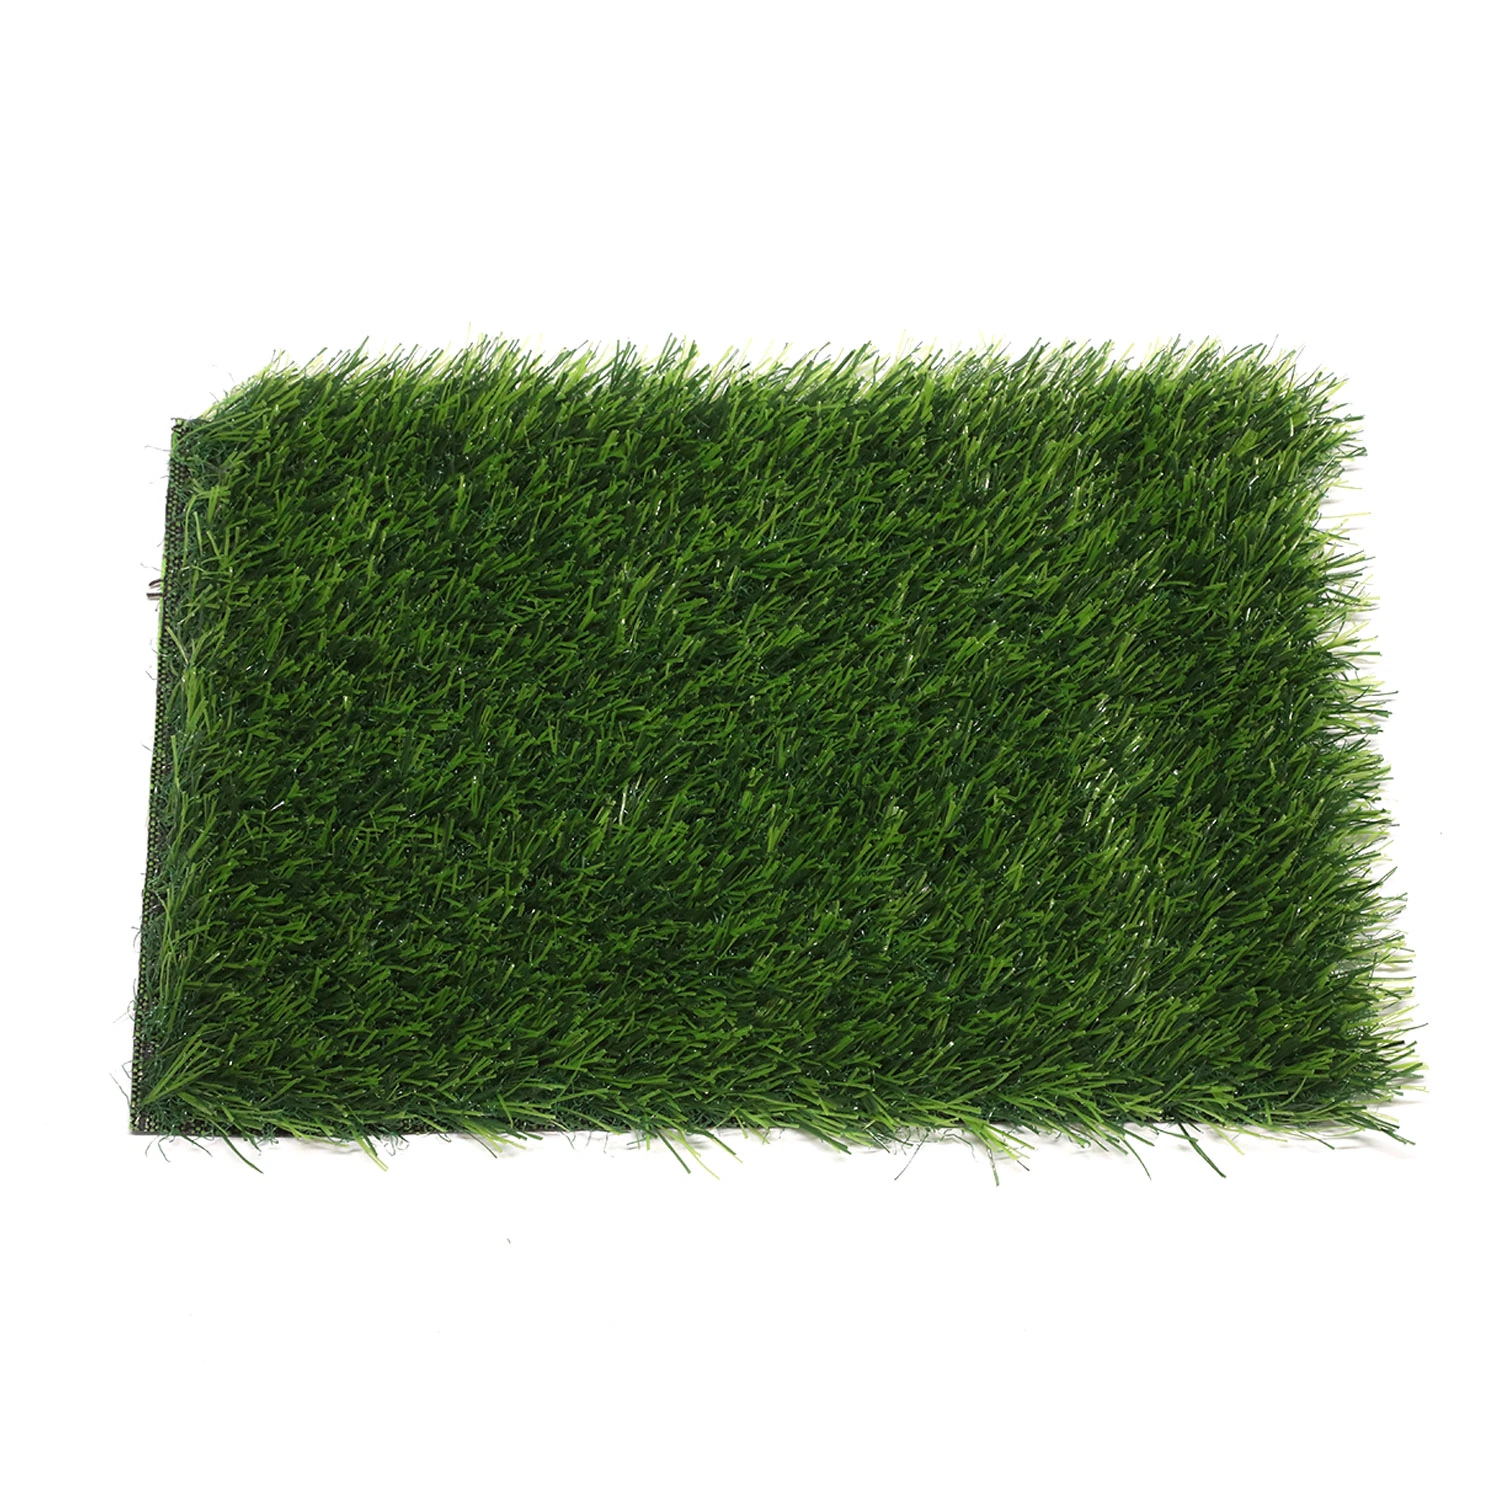 Campo de fútbol de césped verde Nylon LW 50mm de material deportivo recreación